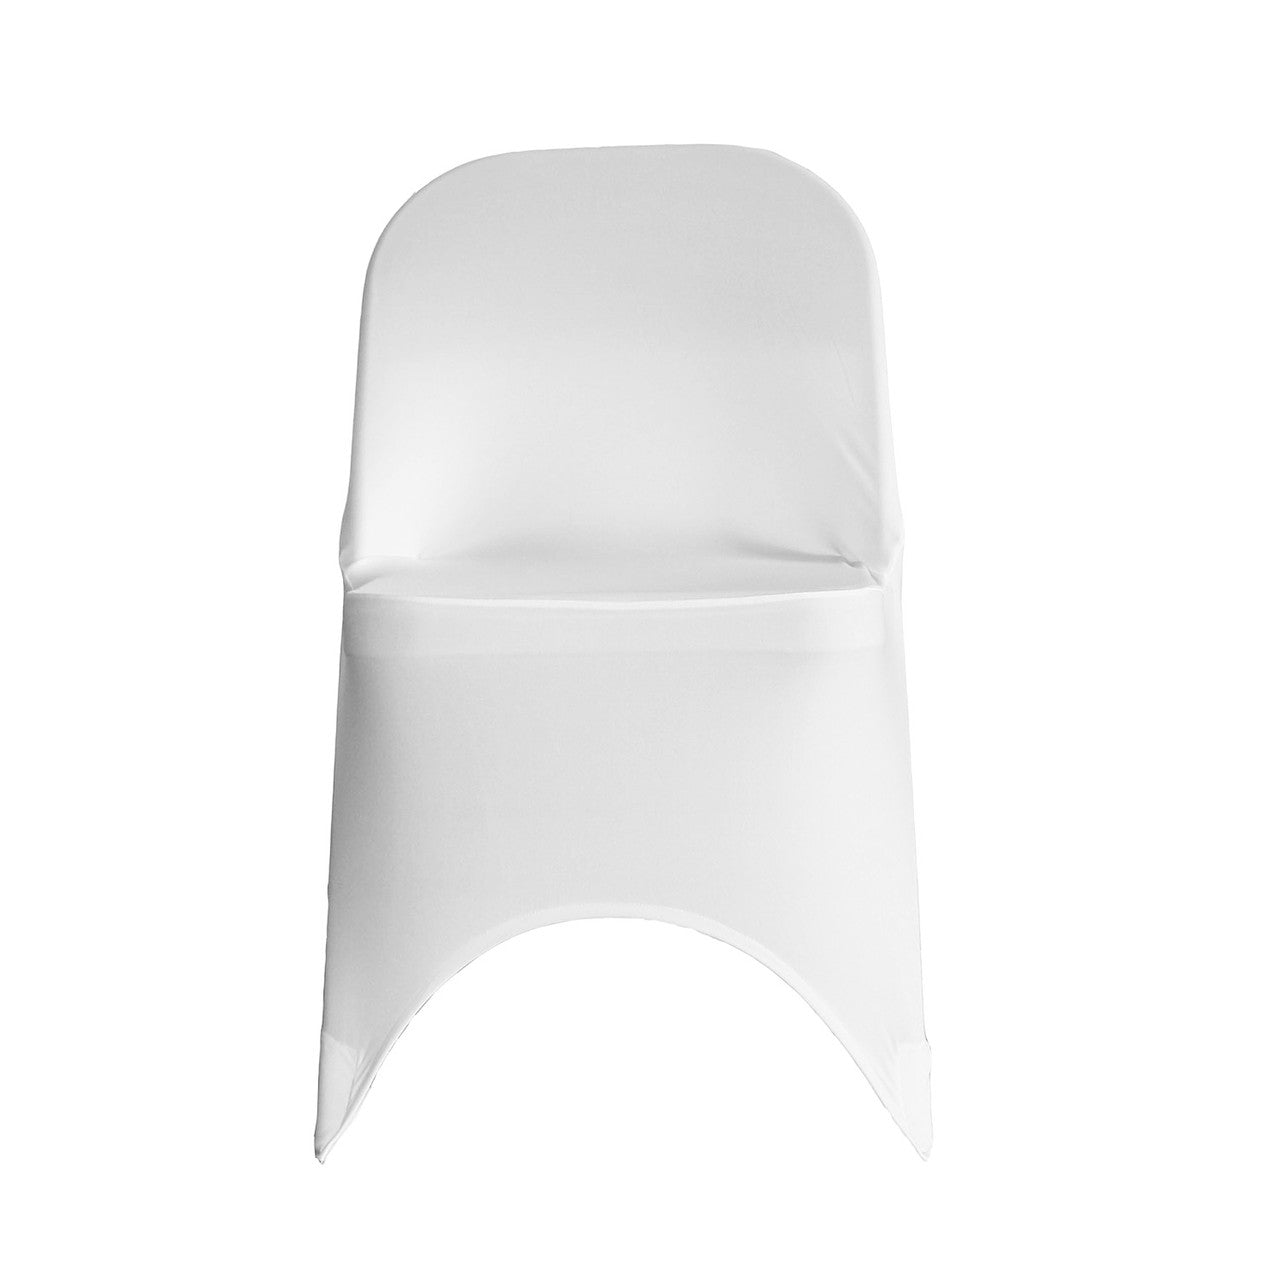 Spandex Folding Chair Cover in Navy – Urquid Linen